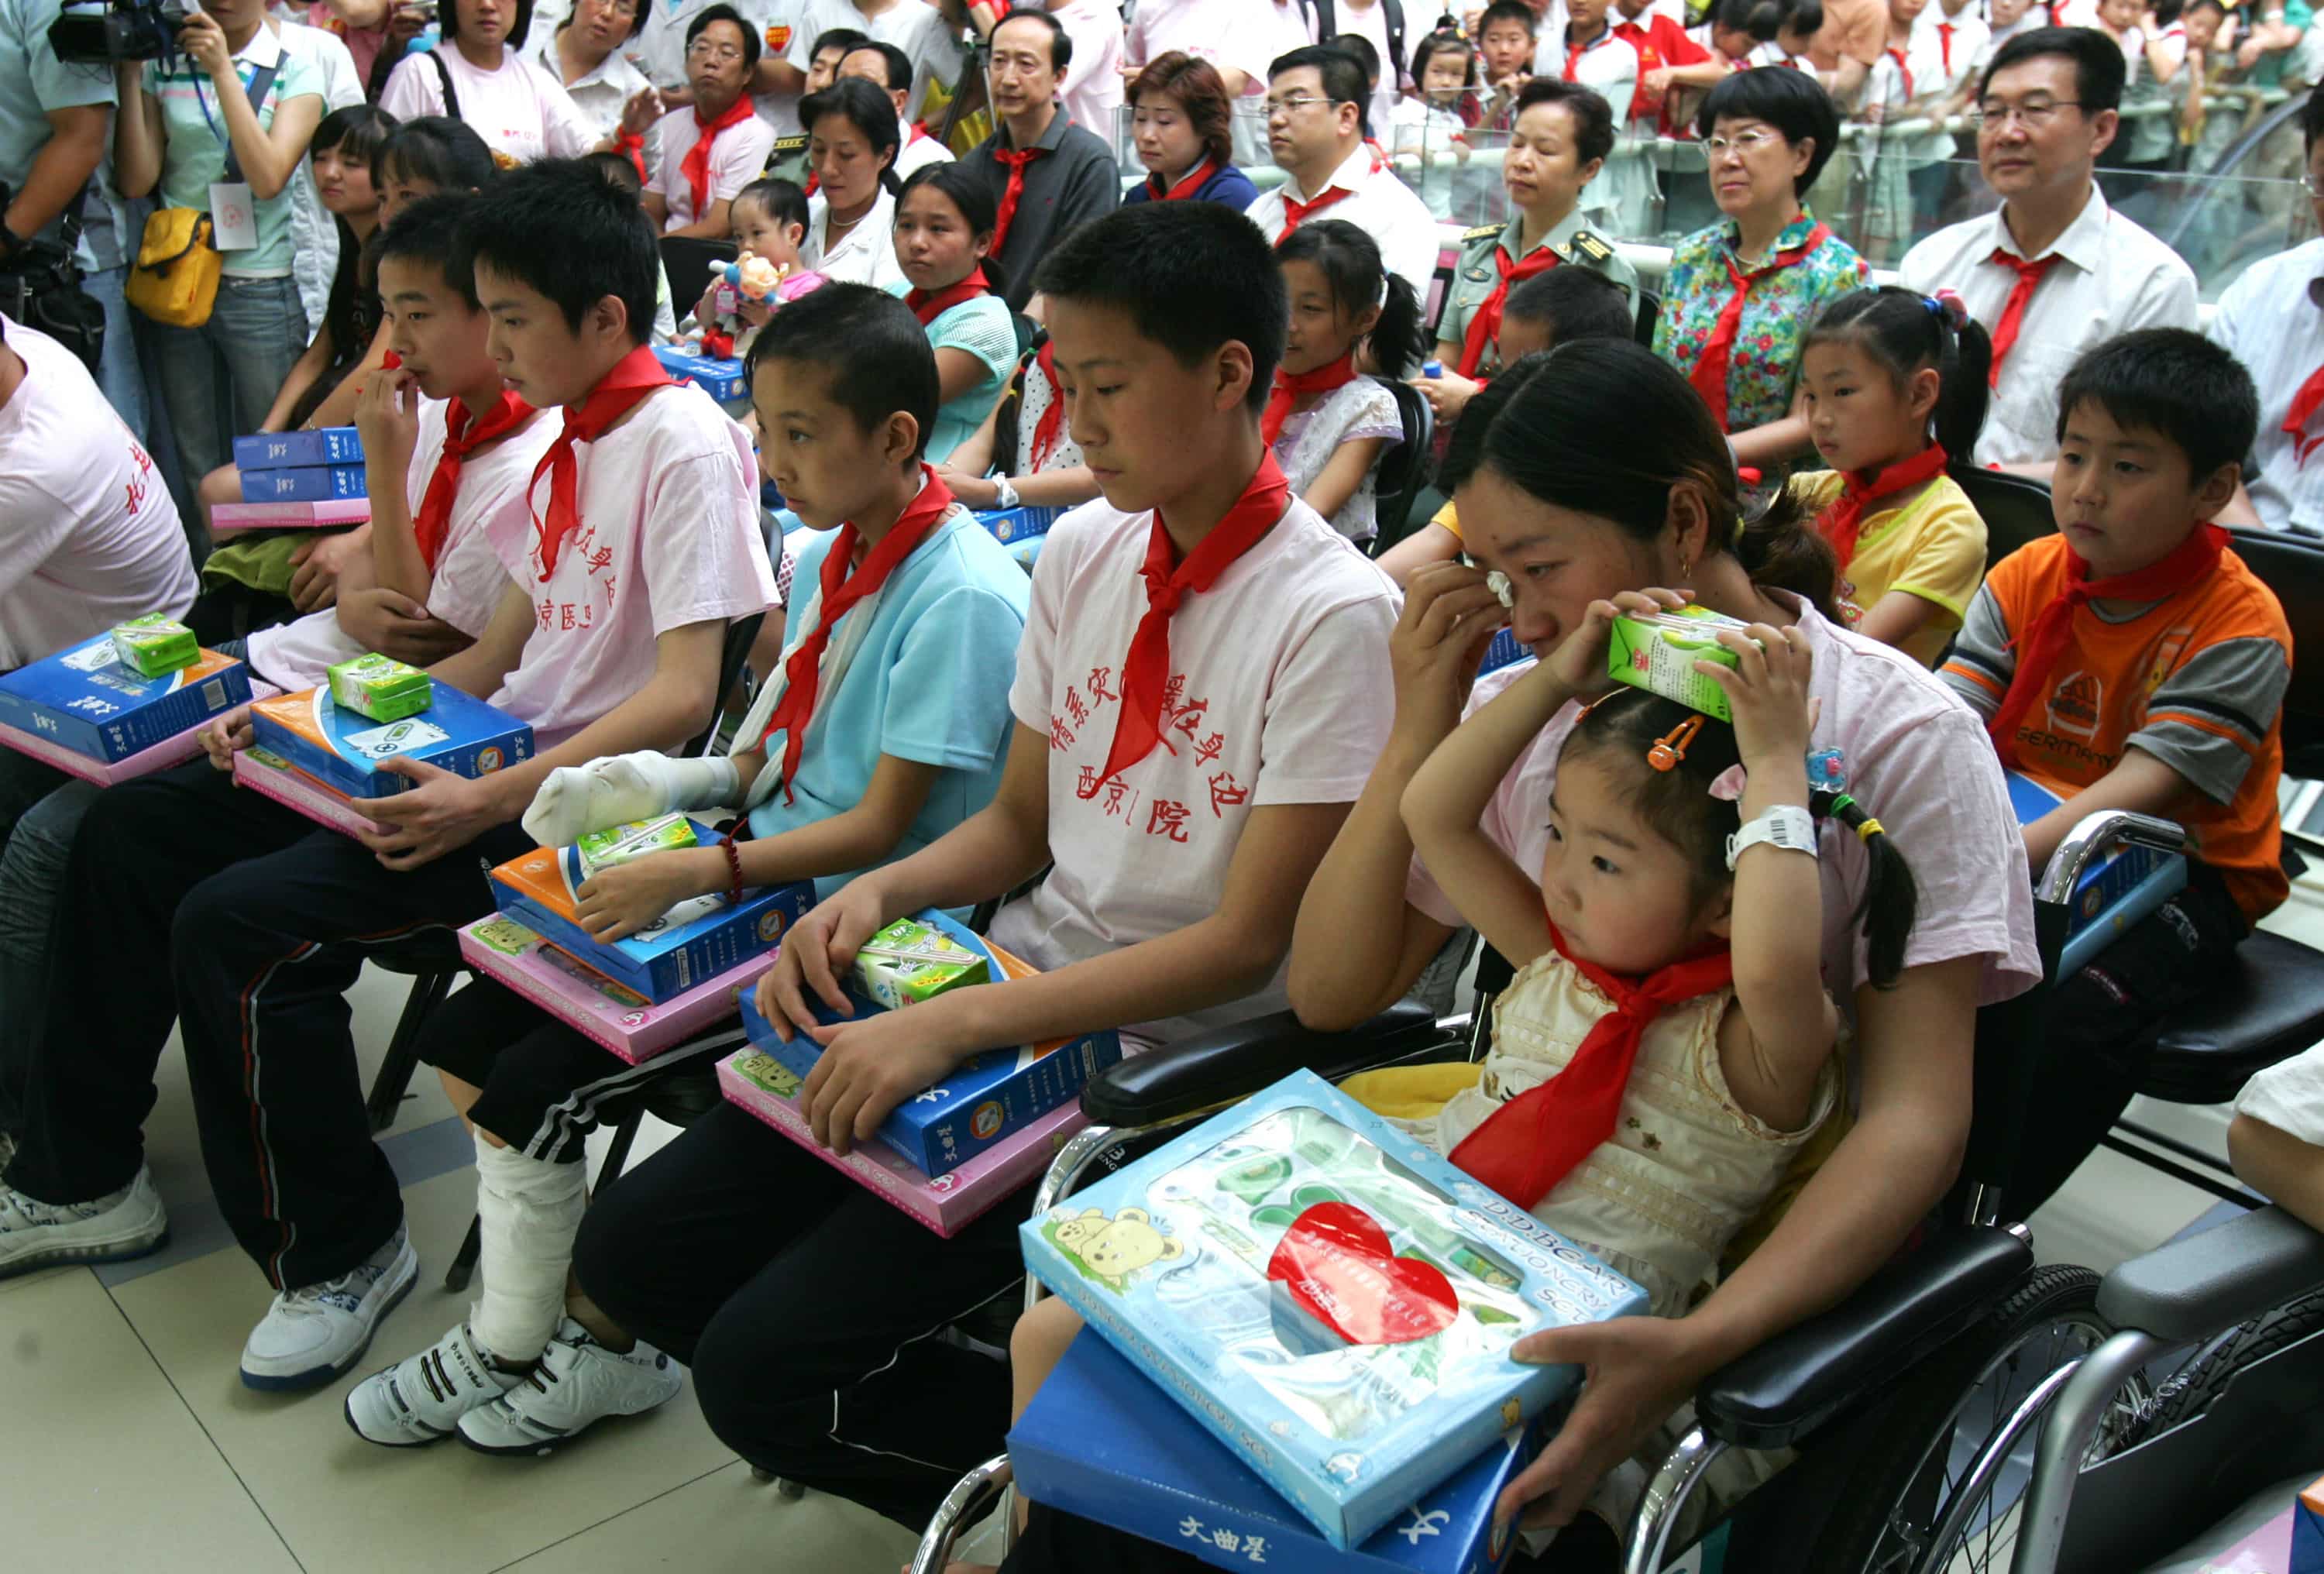 Hospitals In China Starts Drug Testing For School Children